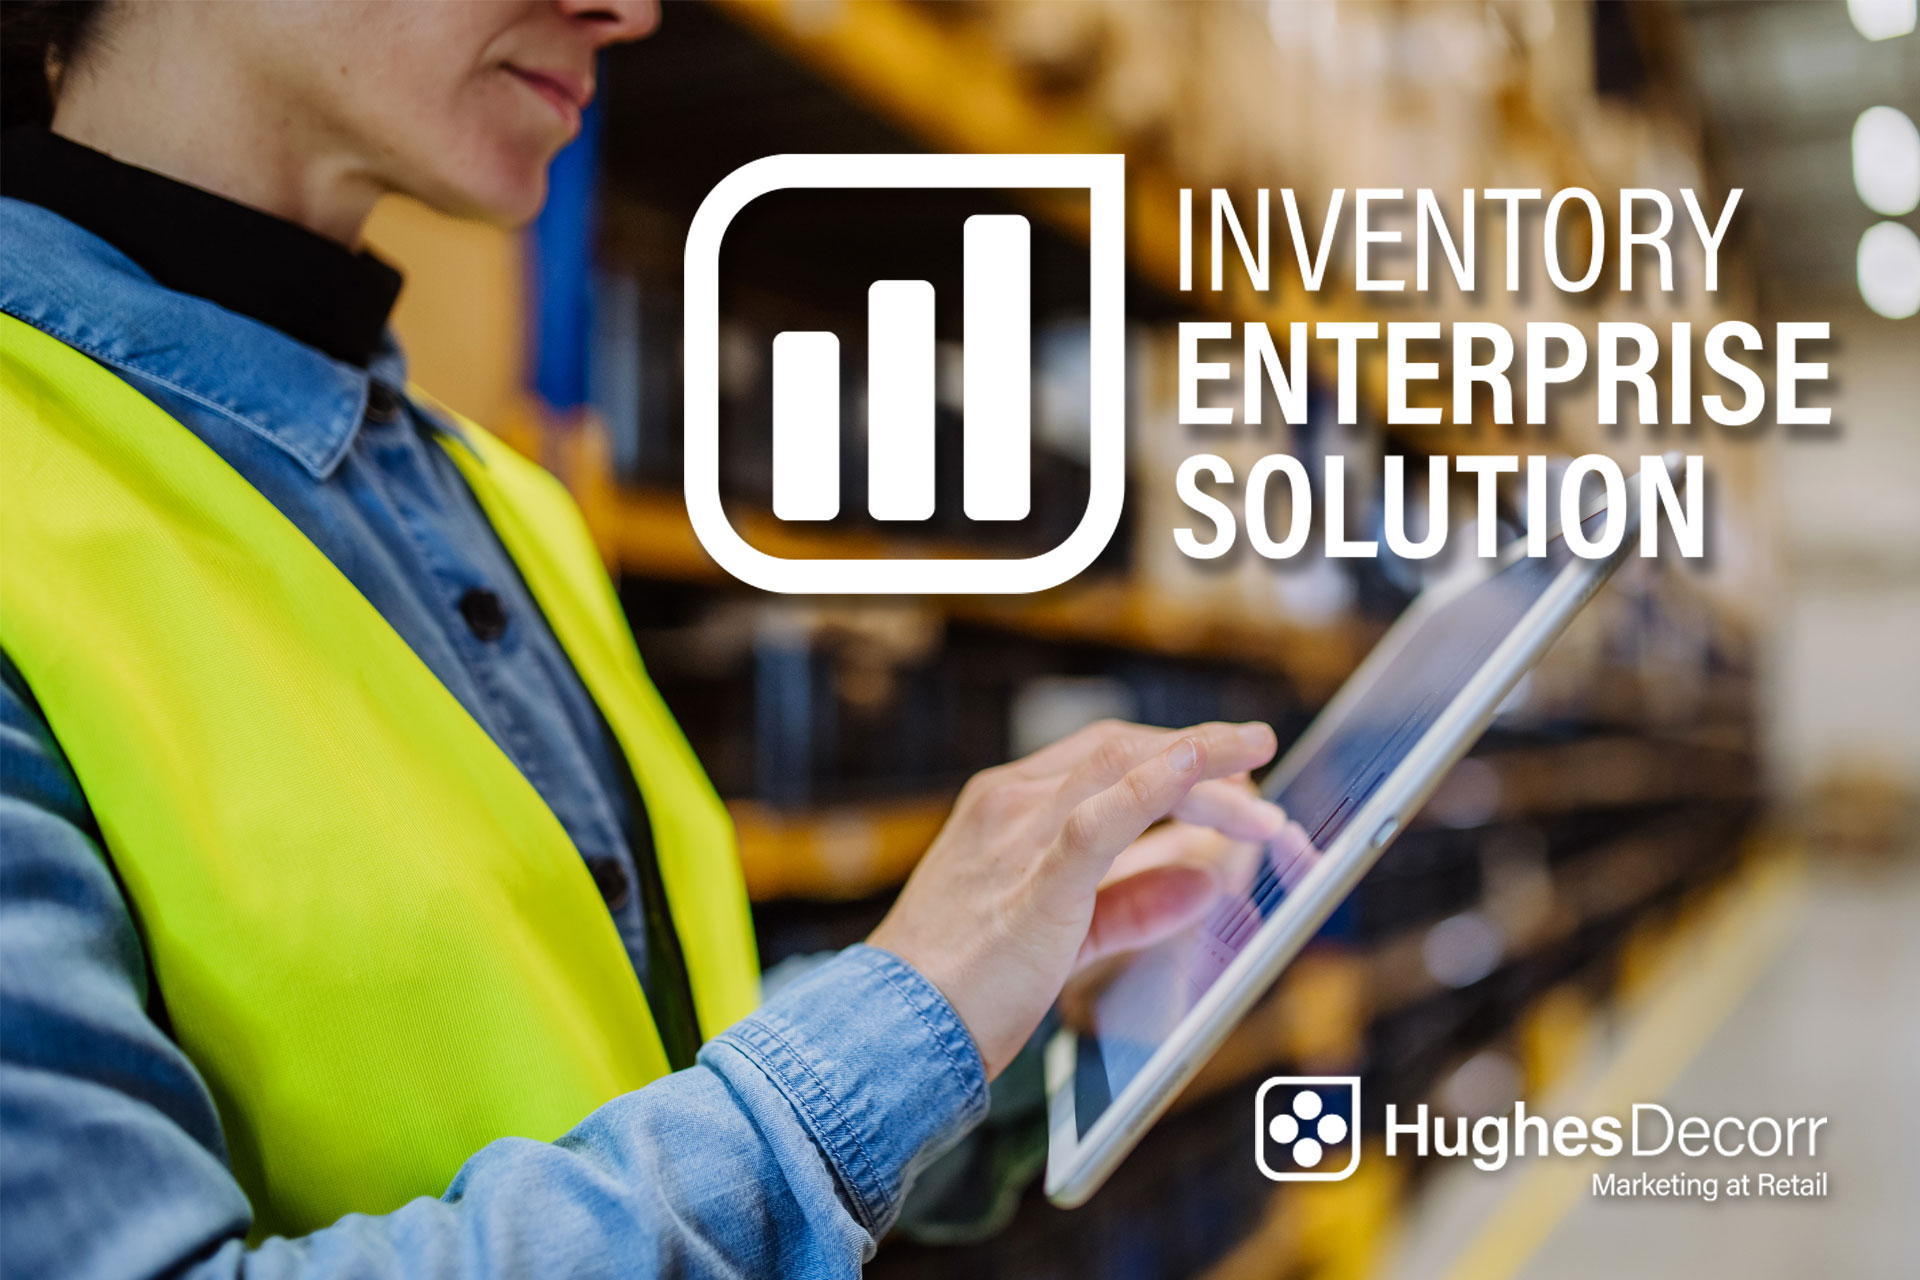 Hughes Decorr's Enterprise Inventory Solutions - IES™